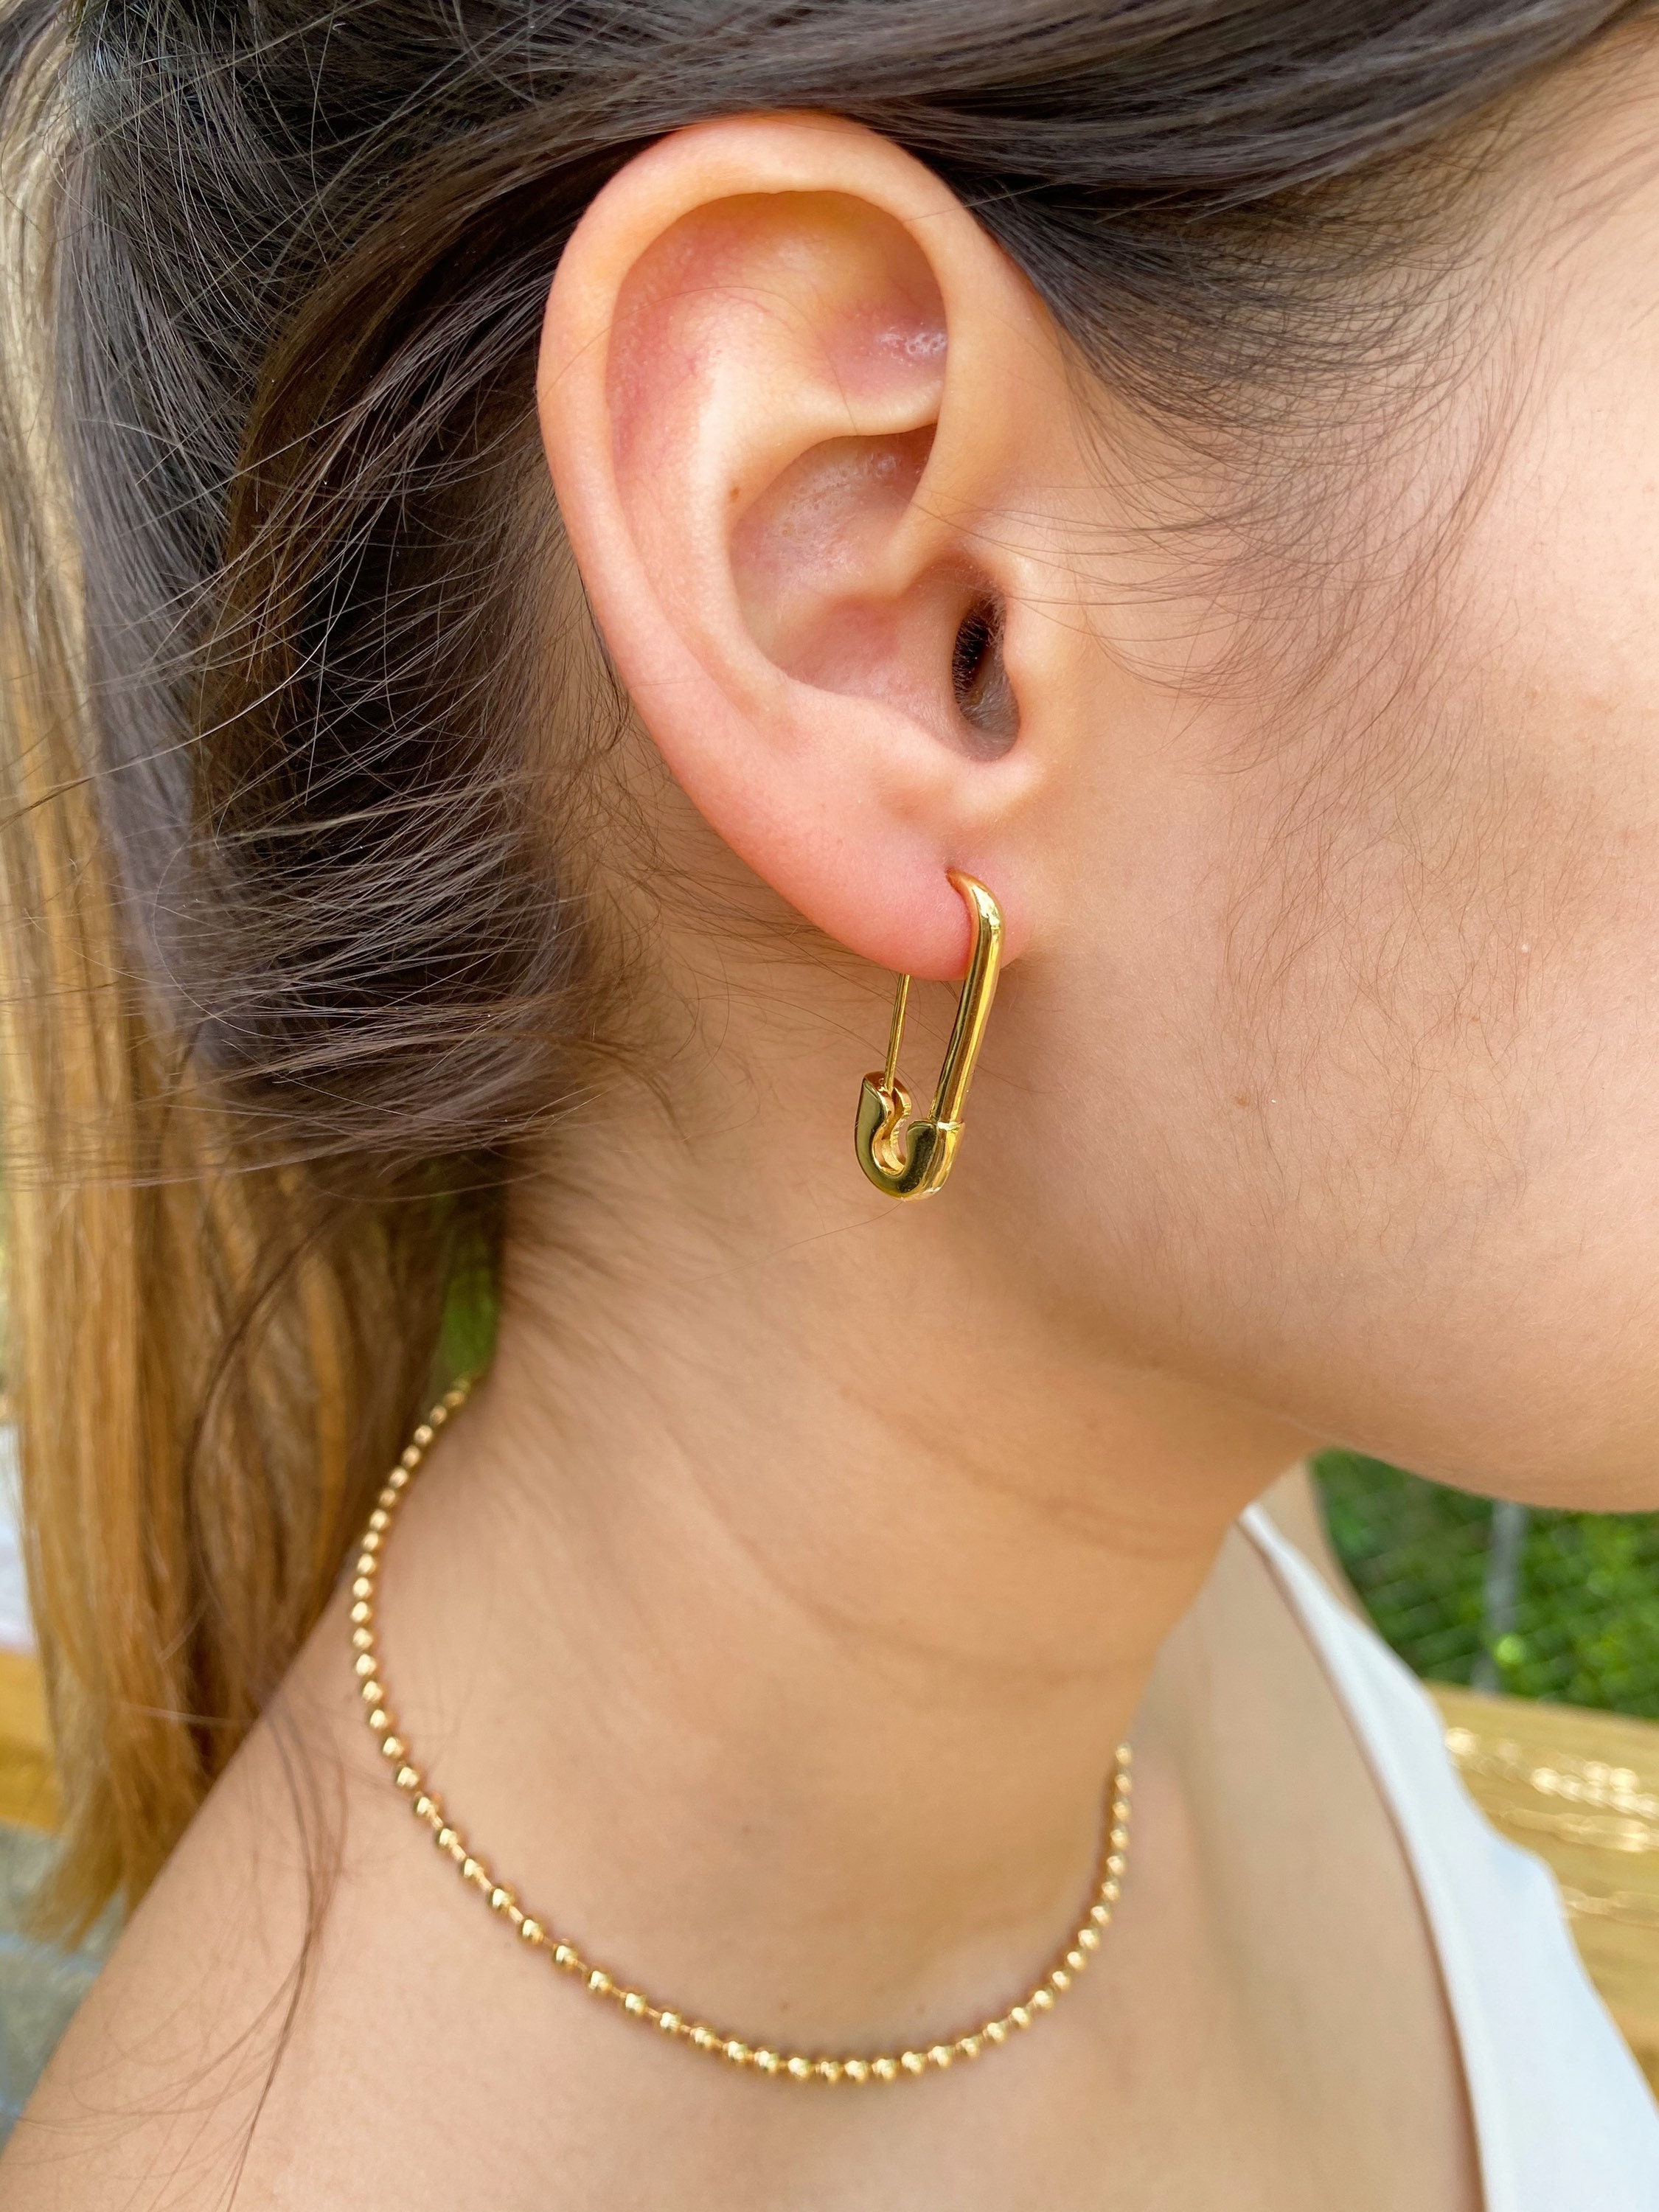 Buy Safety Pin Earrings 14k Gold Plated Jewelry Hypoallergenic Gold Hoops,  Lightweight Minimalist Earrings, Paperclip Earring, Statement Earring  Online in India - Etsy